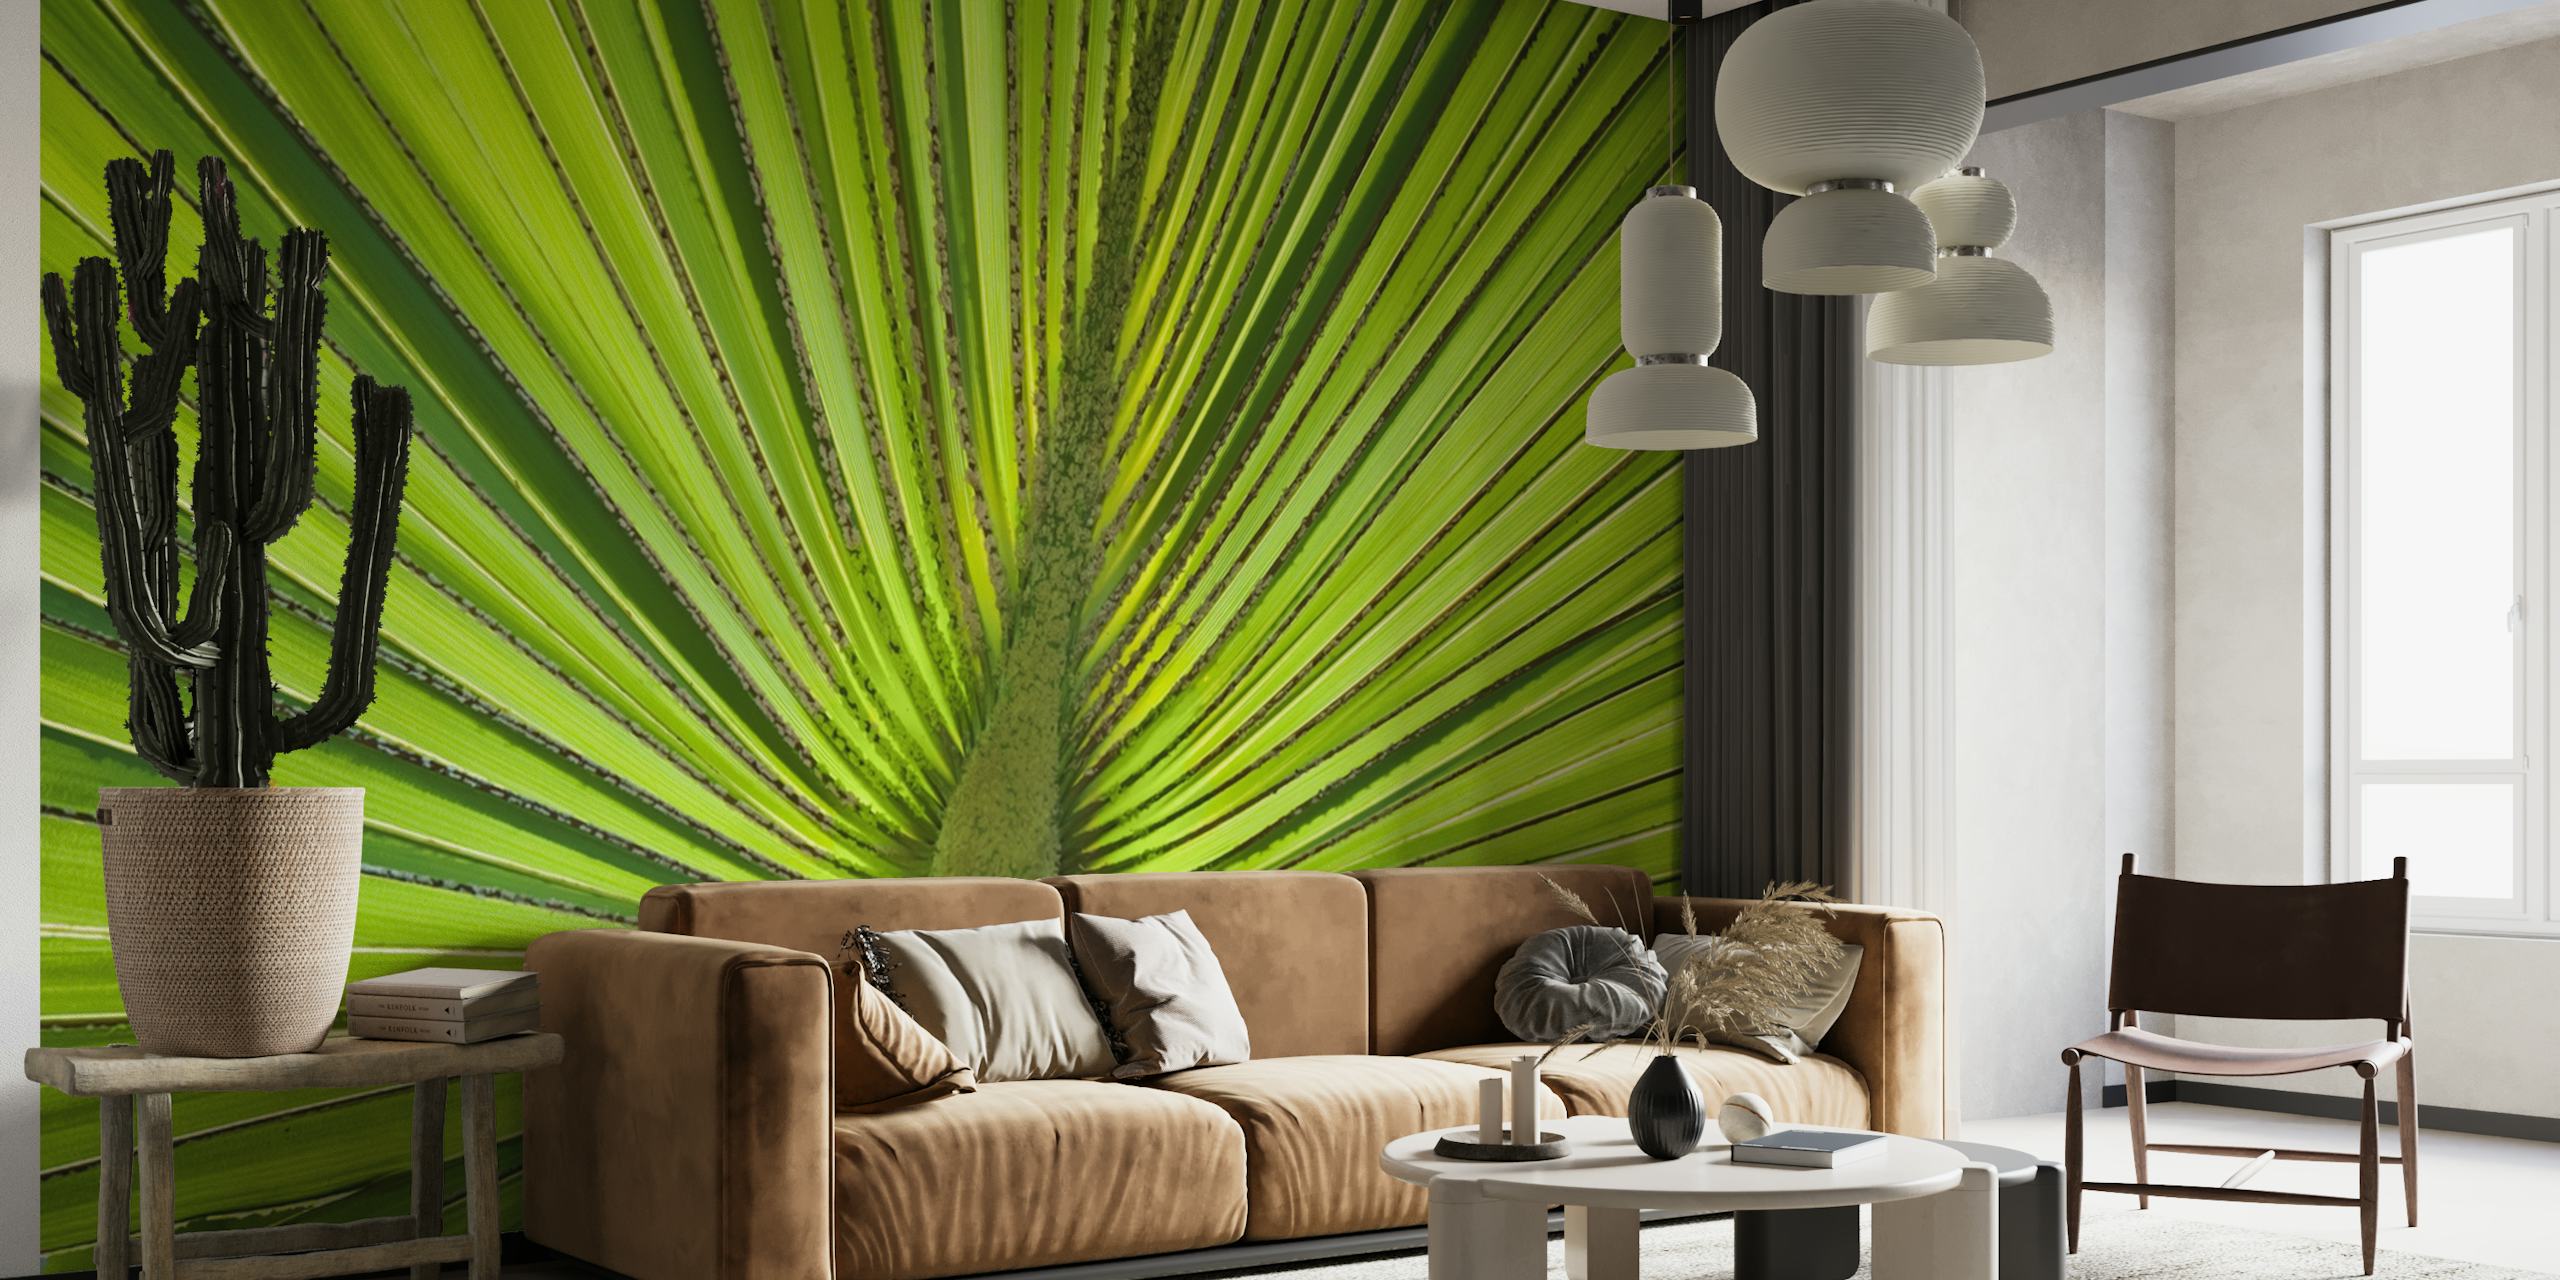 Green Palm Leaf behang